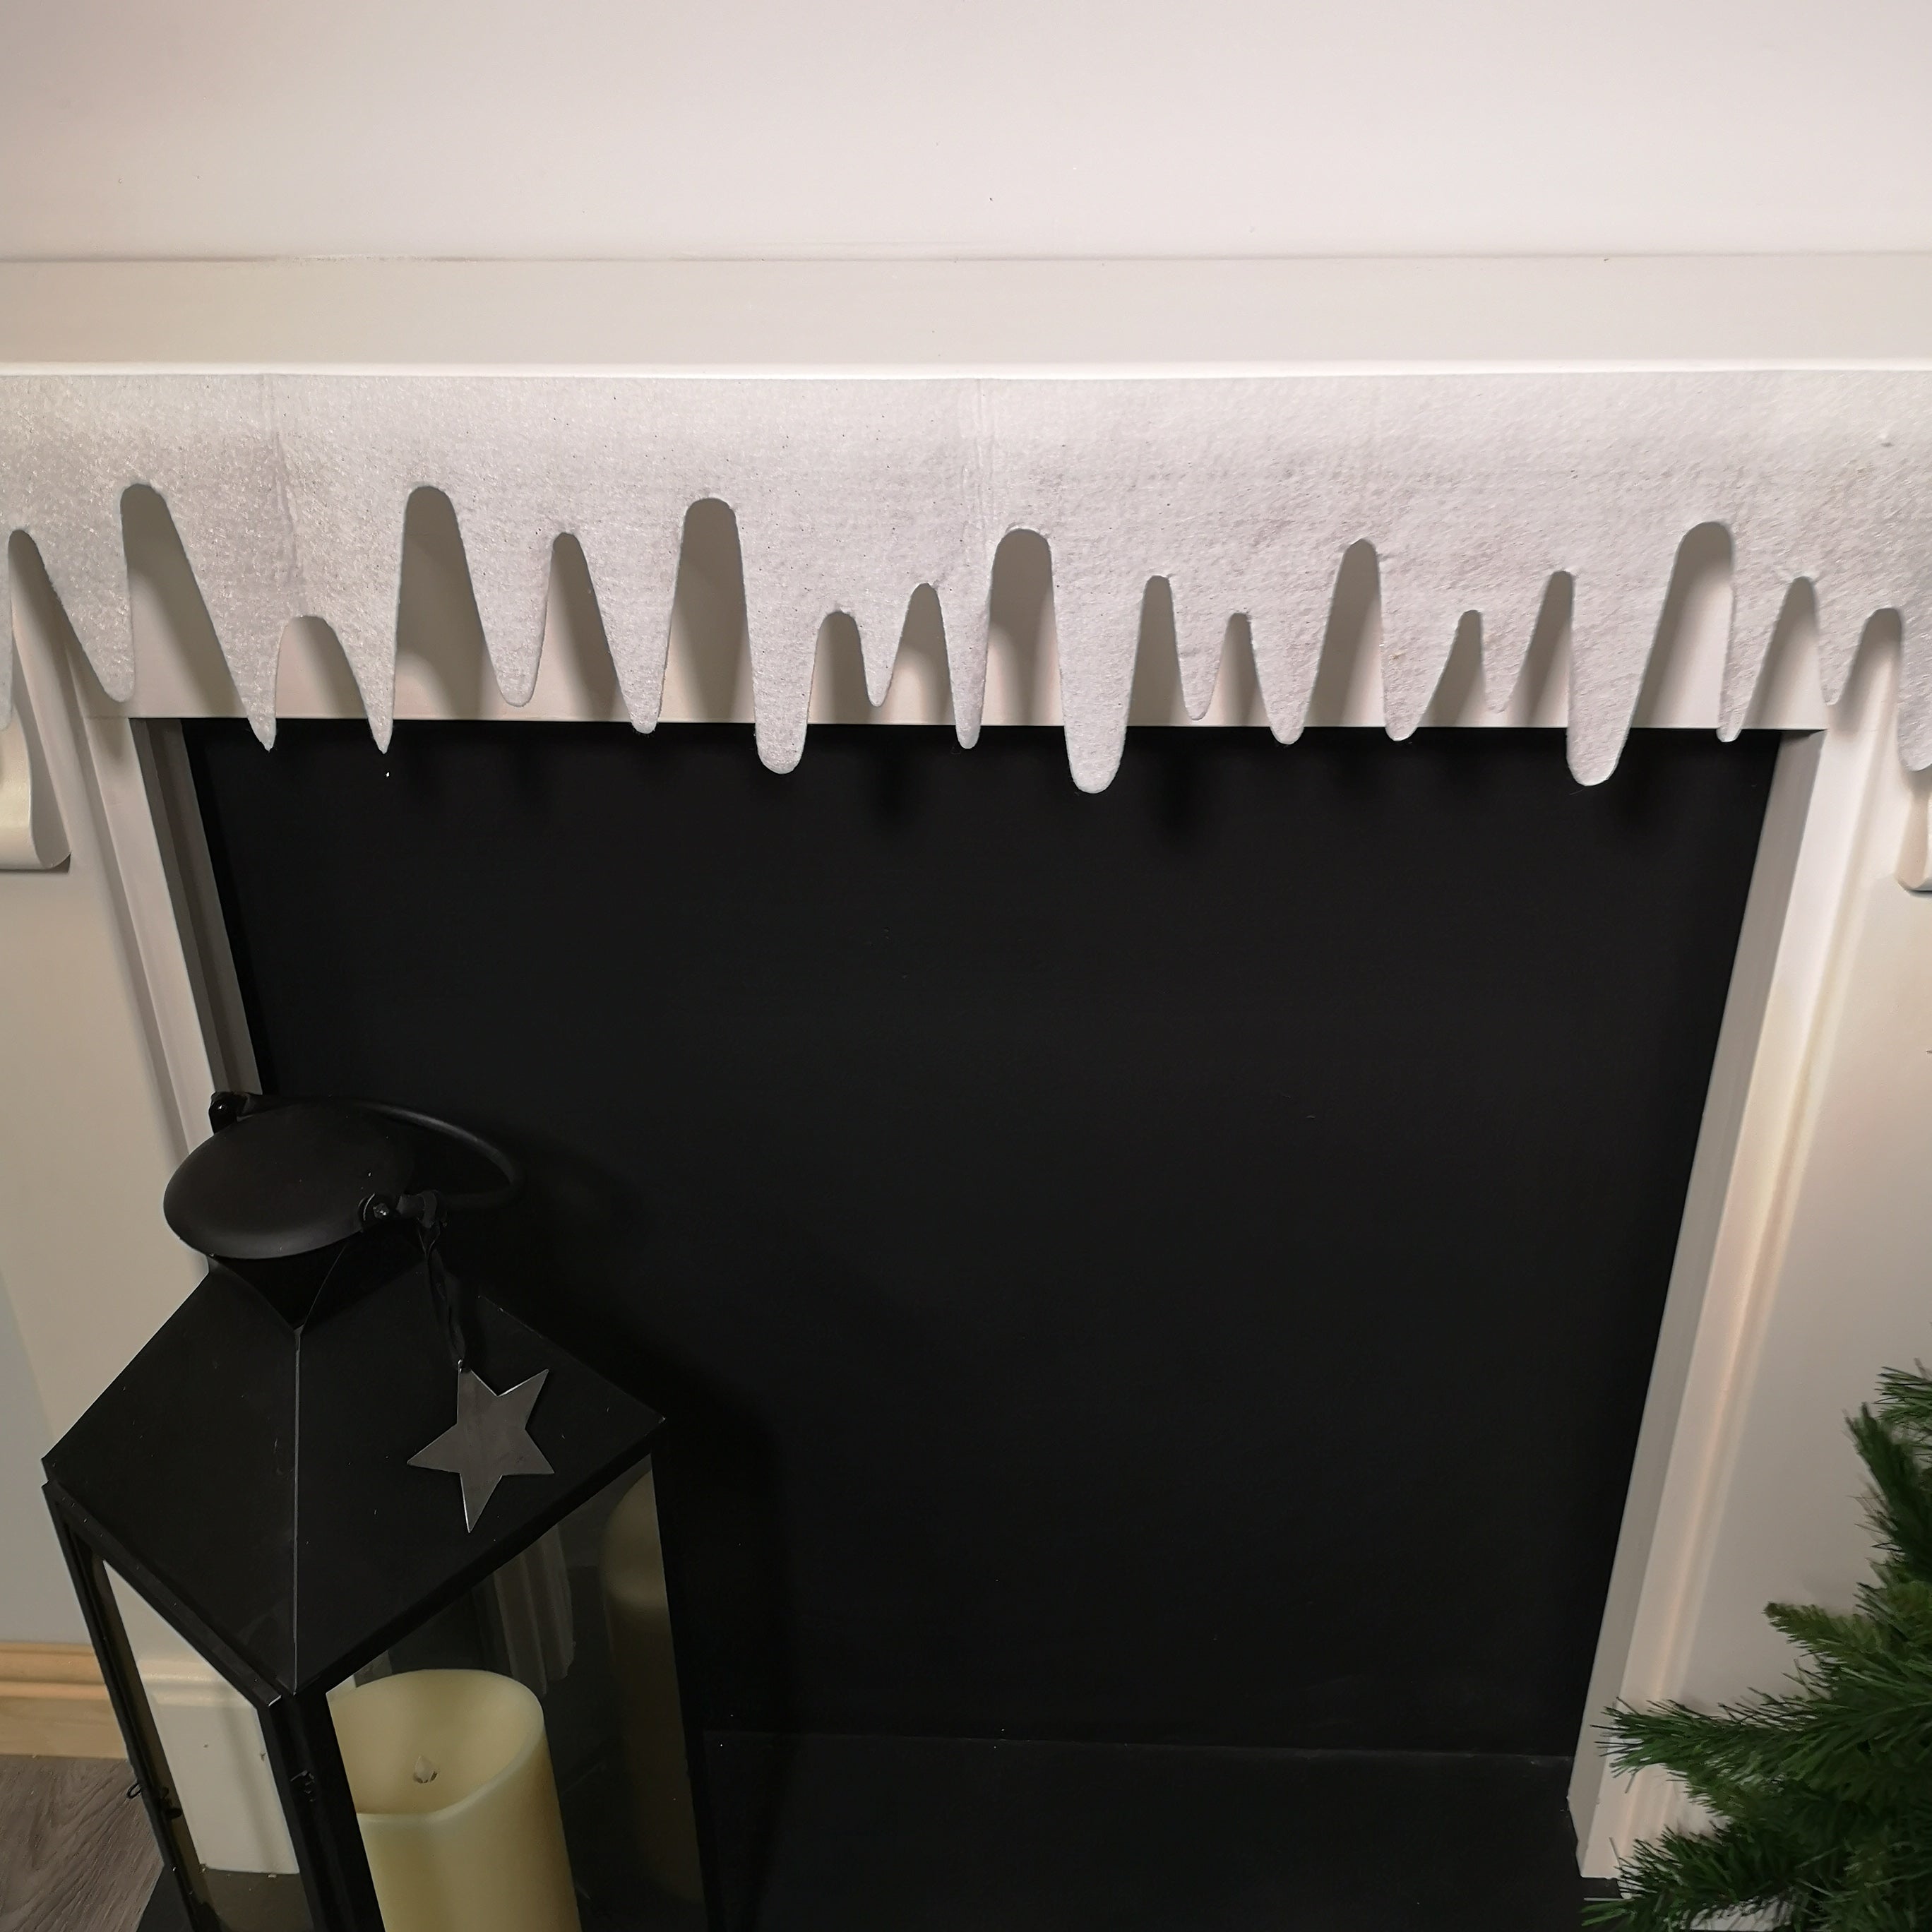 Premier White Felt 18cm x 240cm Decorative Glitter Christmas Icicle Fringe Wall Fireplace Decoration